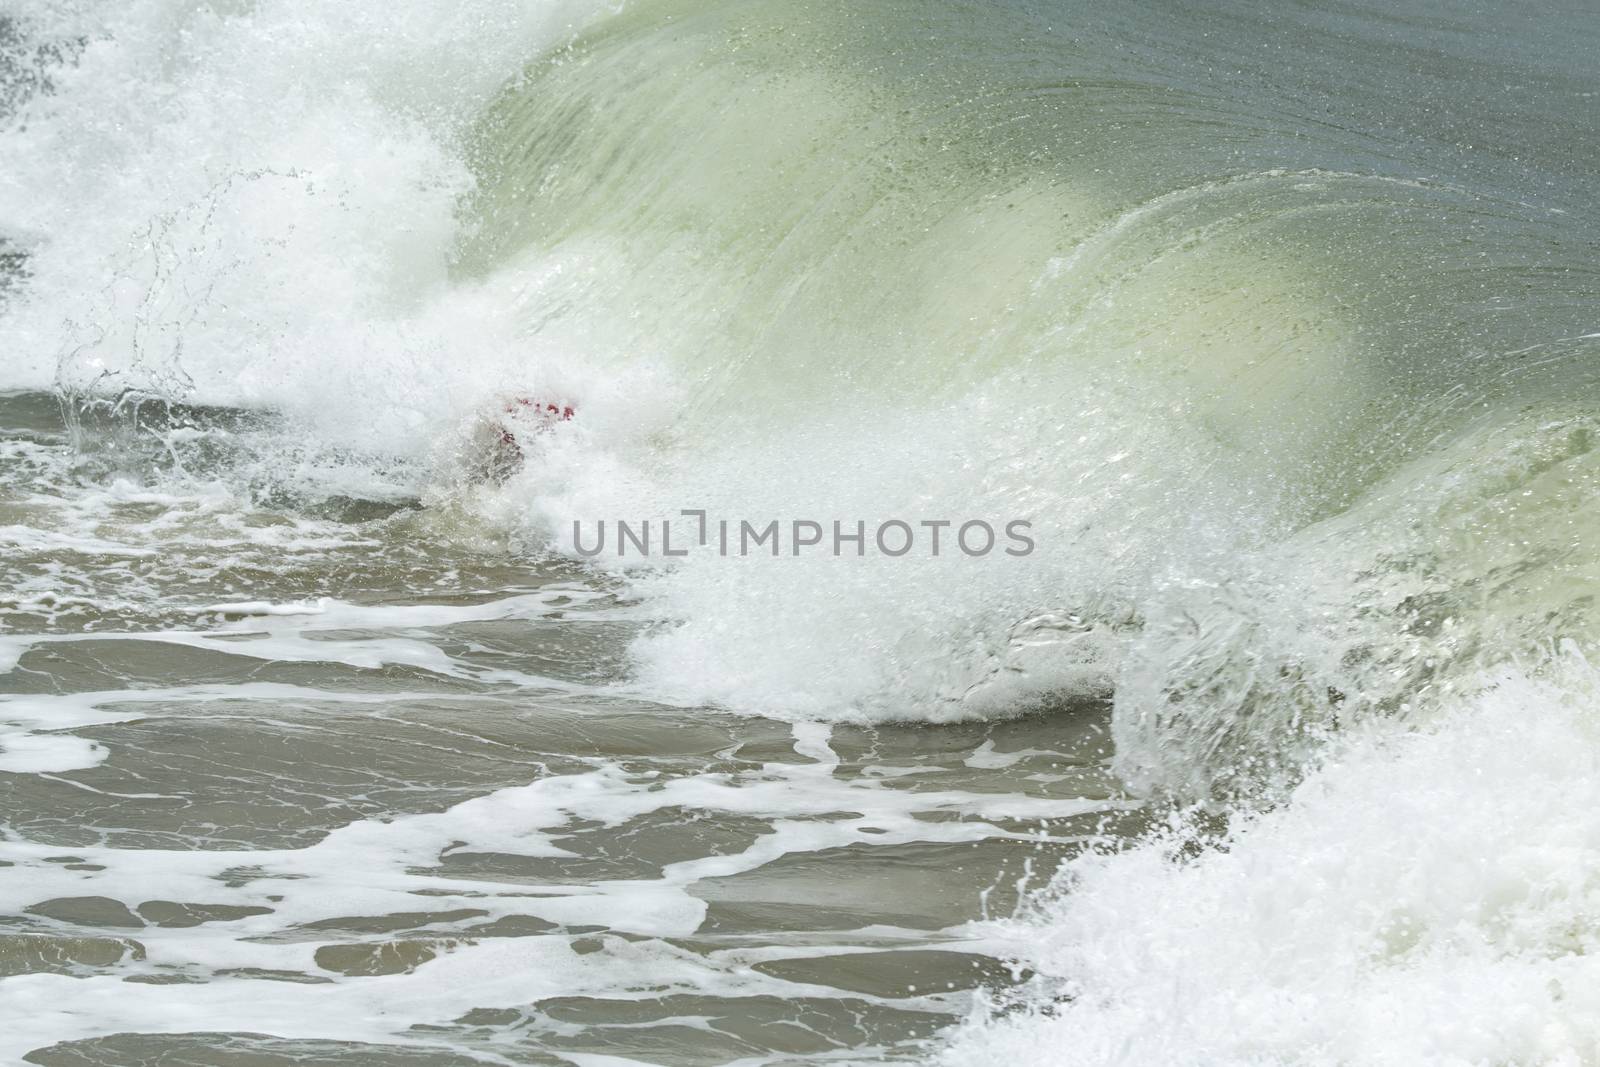 Body border under the wave. Surfing training beginning